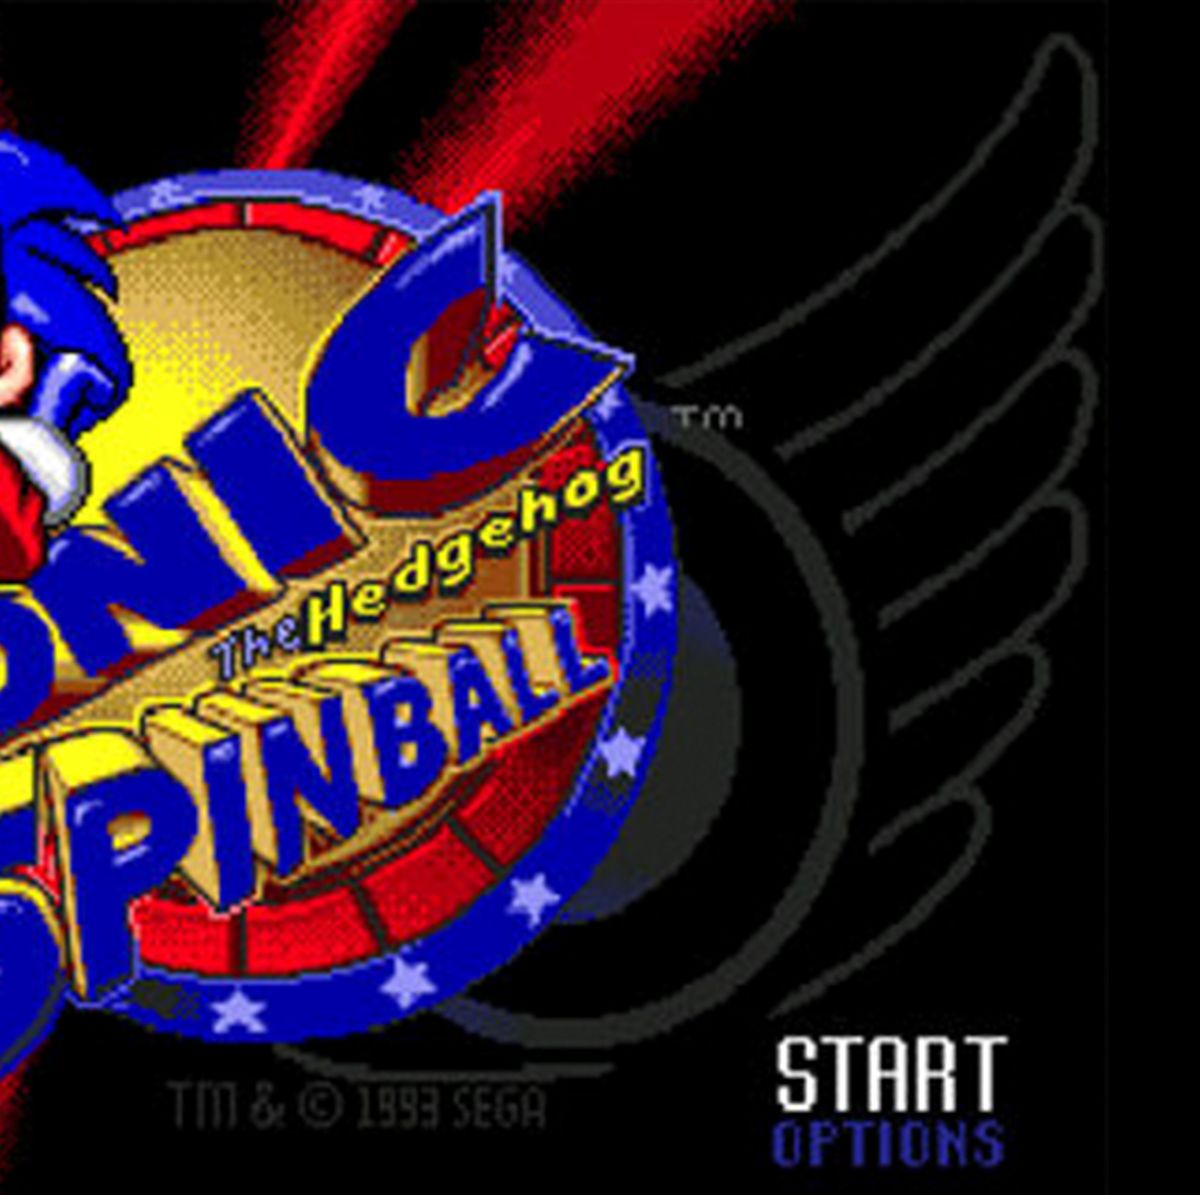 Play Mecha Sonic in Sonic the Hedgehog (Proof of Concept) Online - Sega  Genesis Classic Games Online